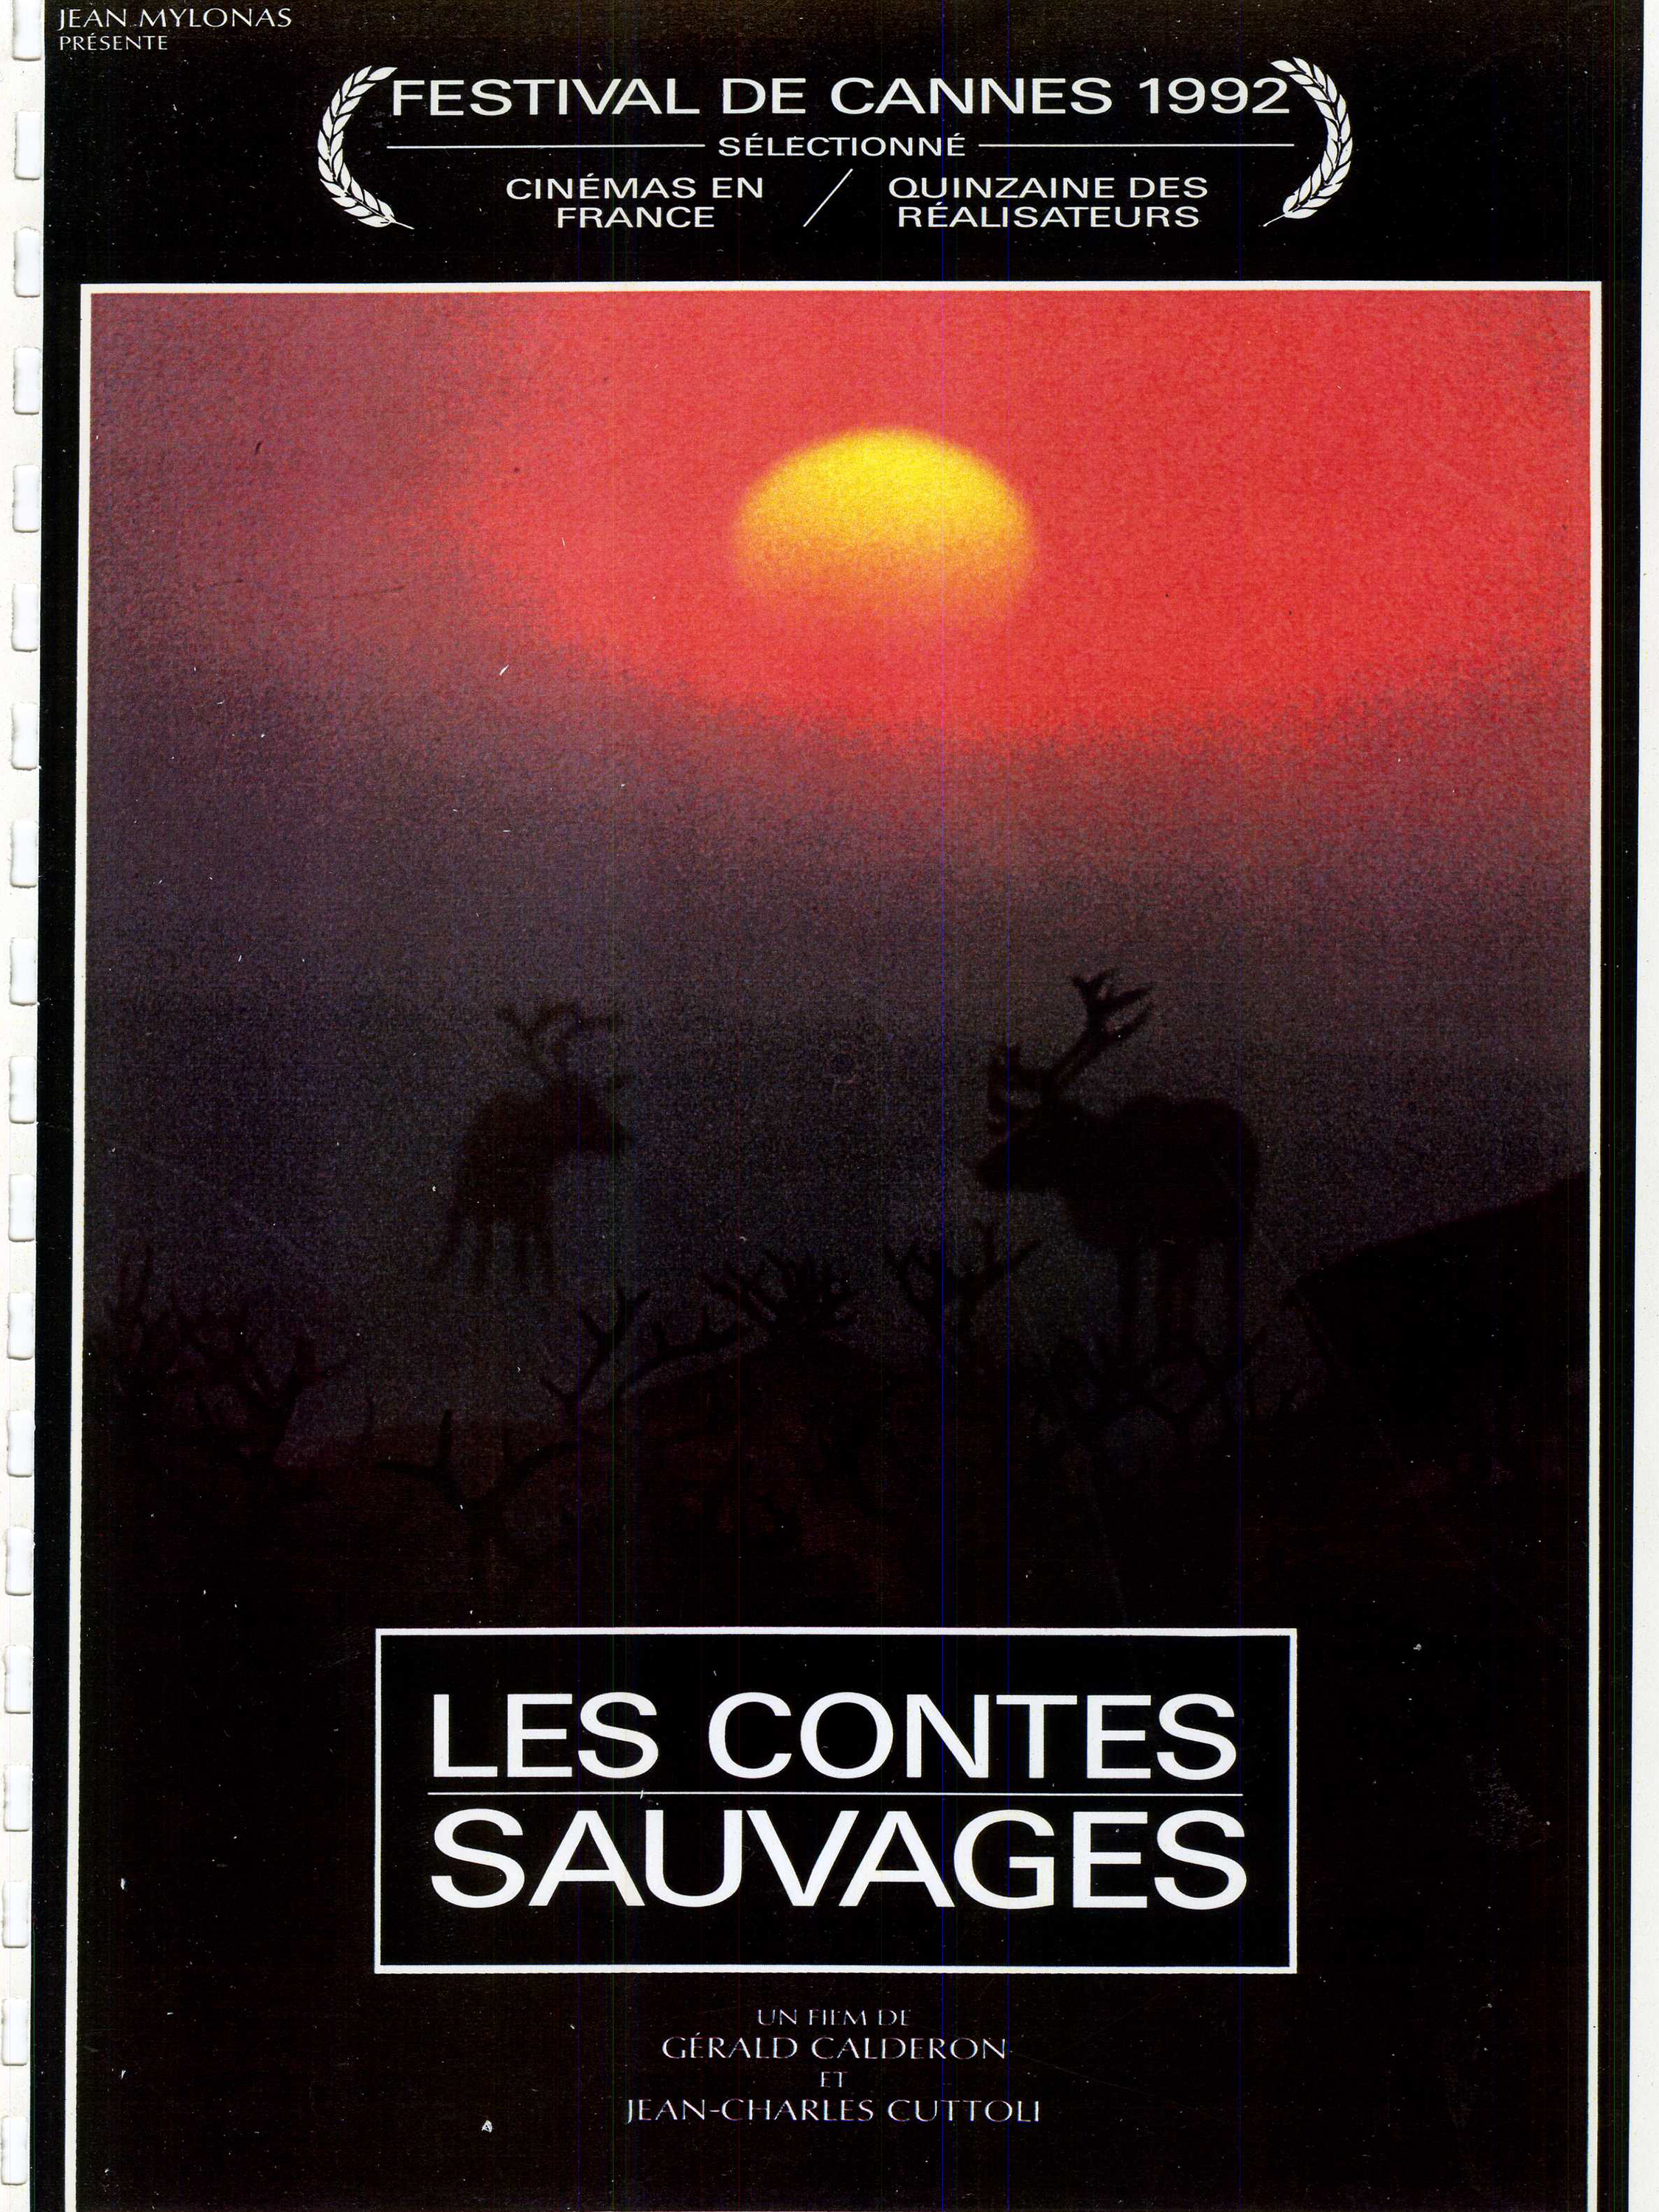 Les contes sauvages (1991) Screenshot 2 